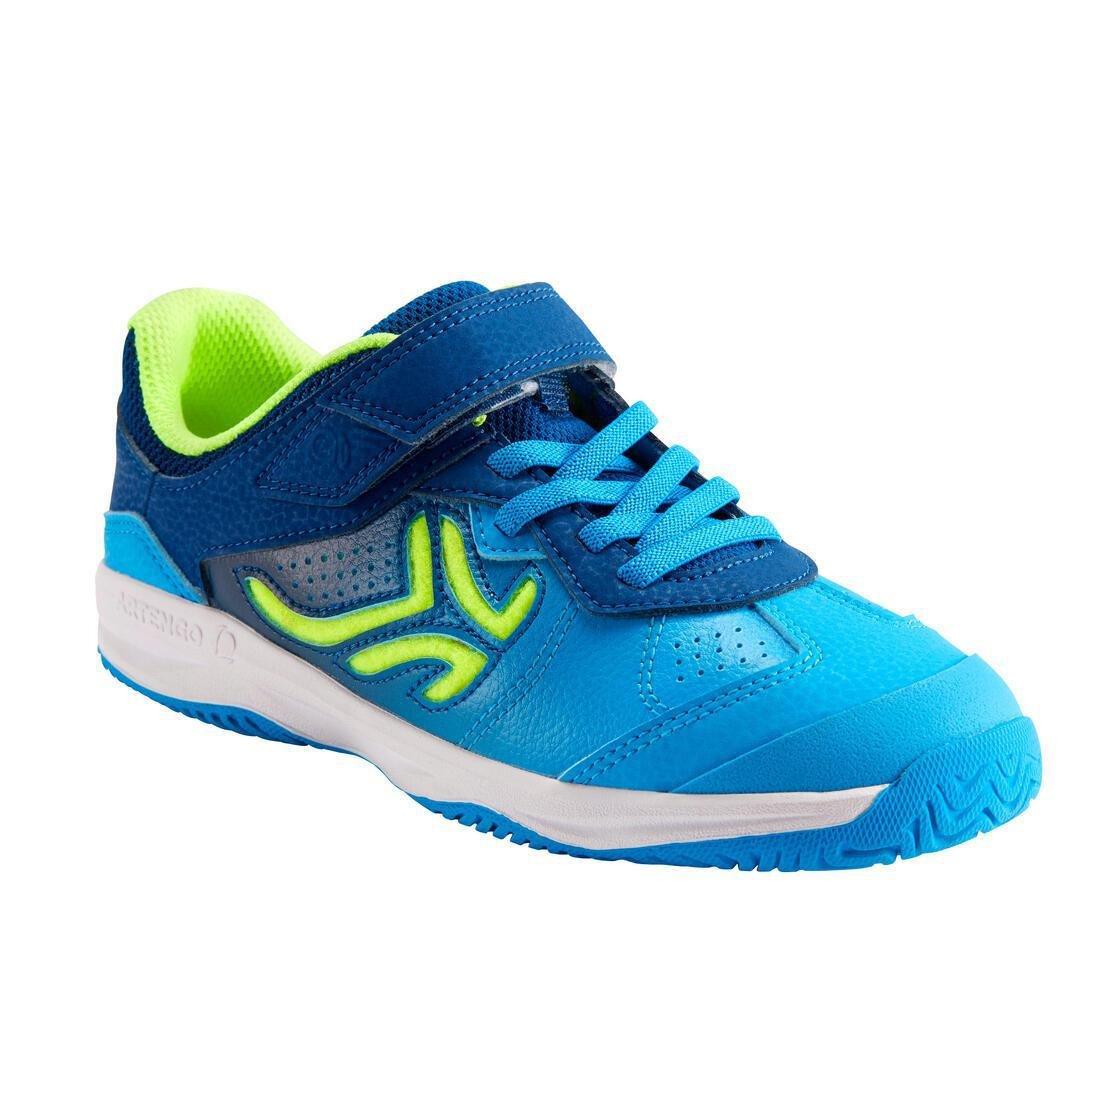 DECATHLON - Kids Tennis Shoes - Ts160, Blue